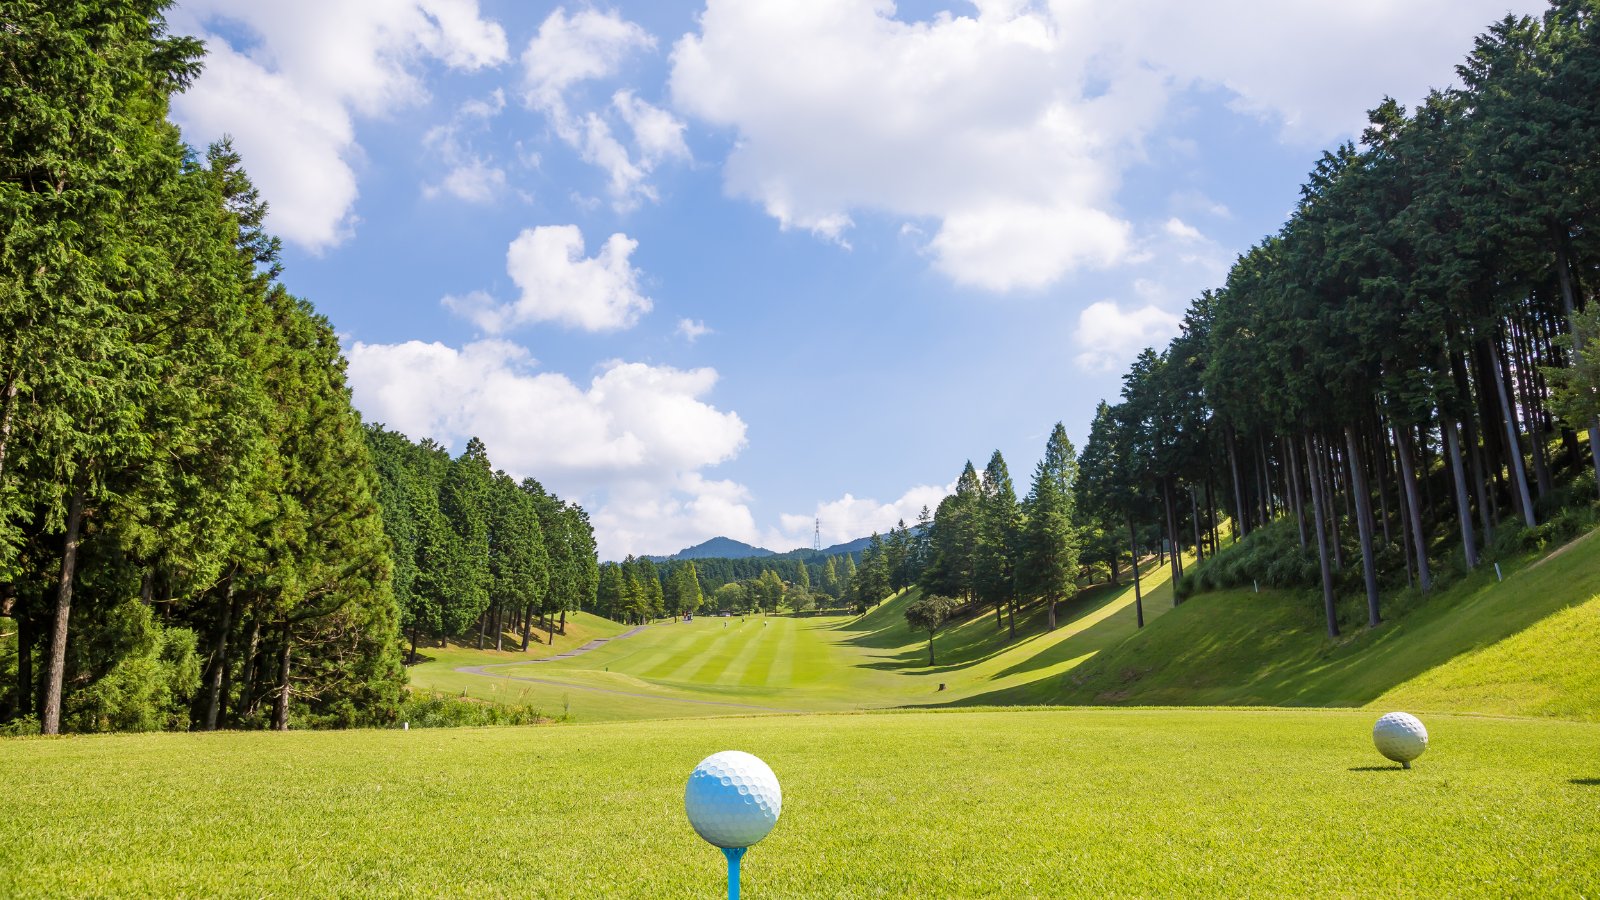 Golf course in North America